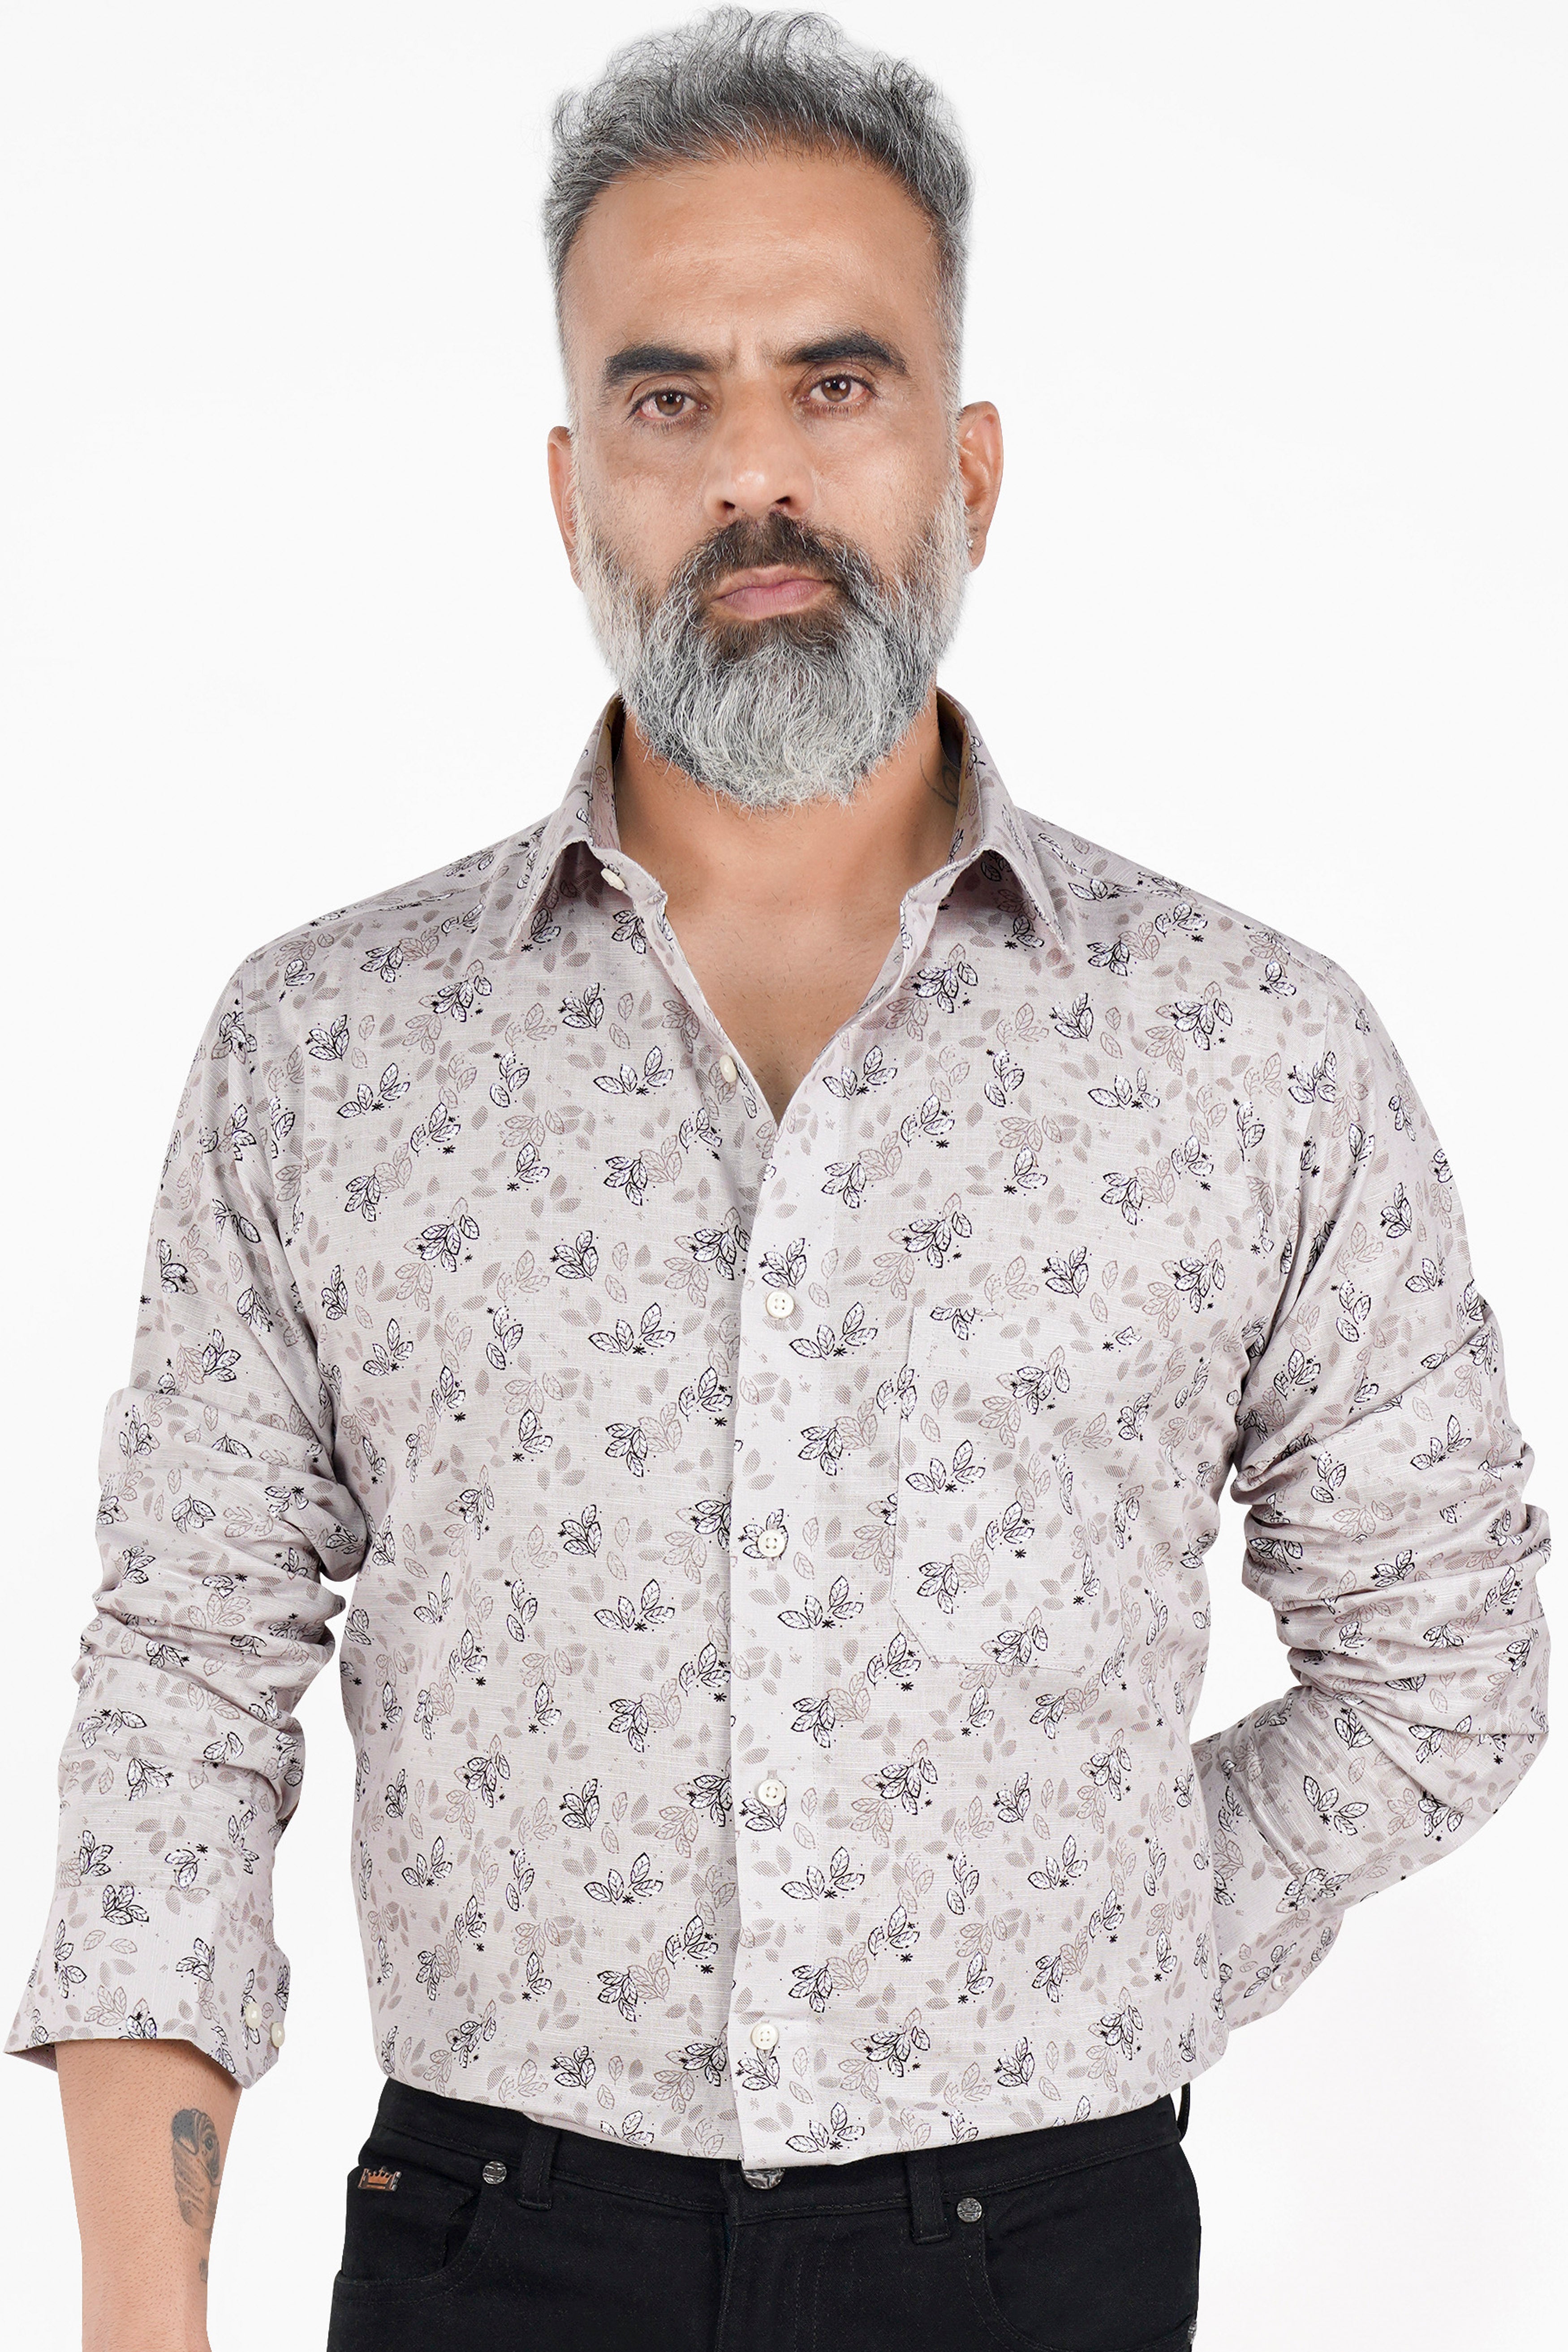 Timberwolf Gray Ditsy Printed Twill Premium Cotton Shirt